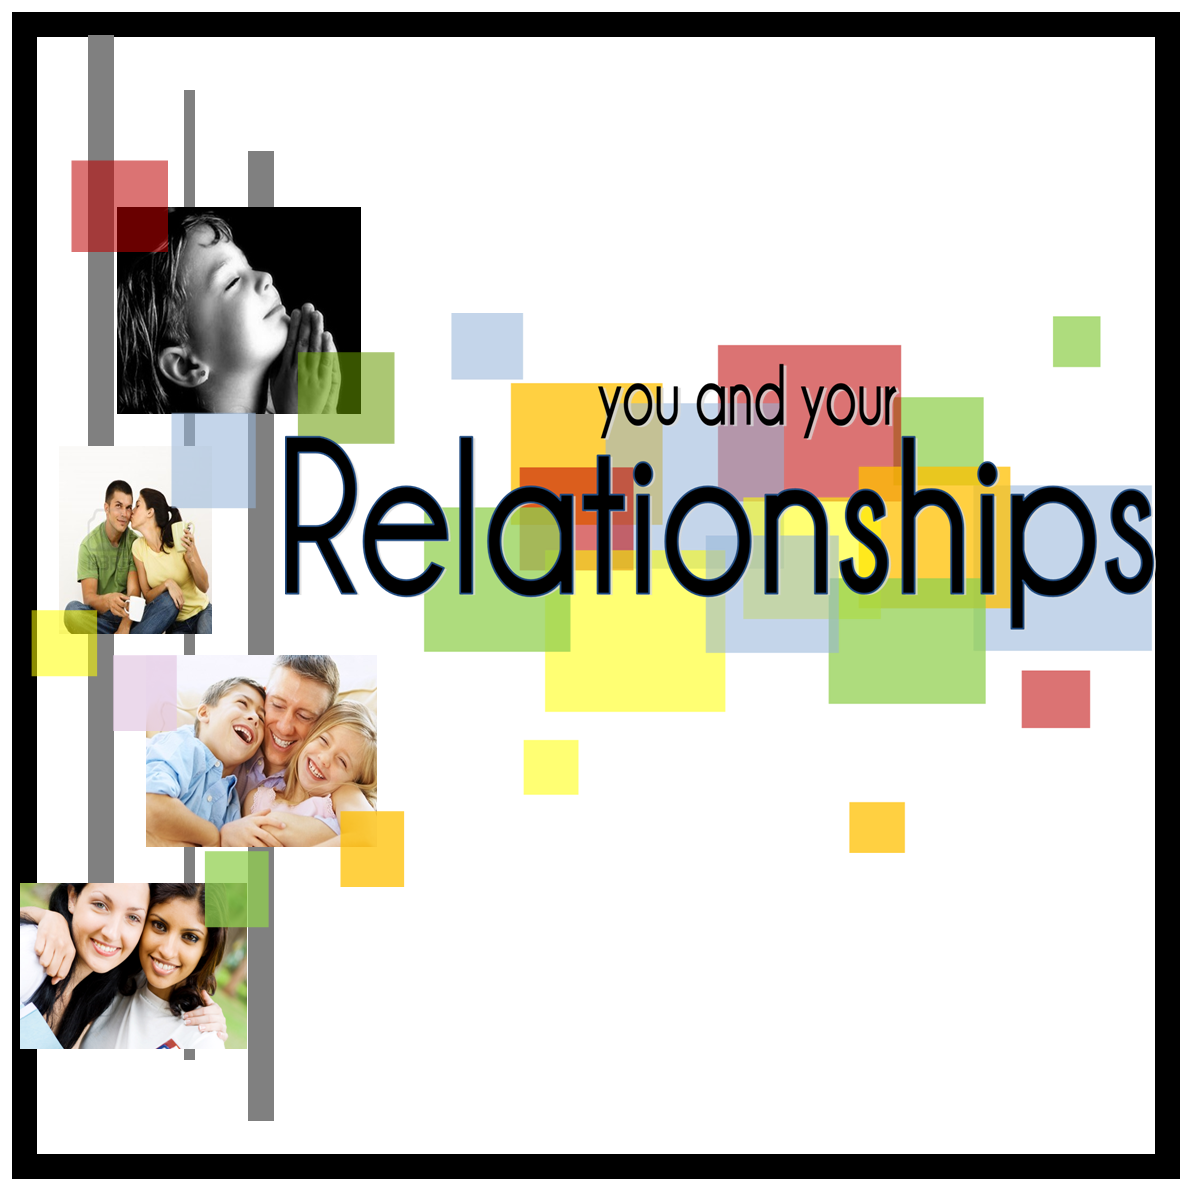 Relationships sermon header for website.png